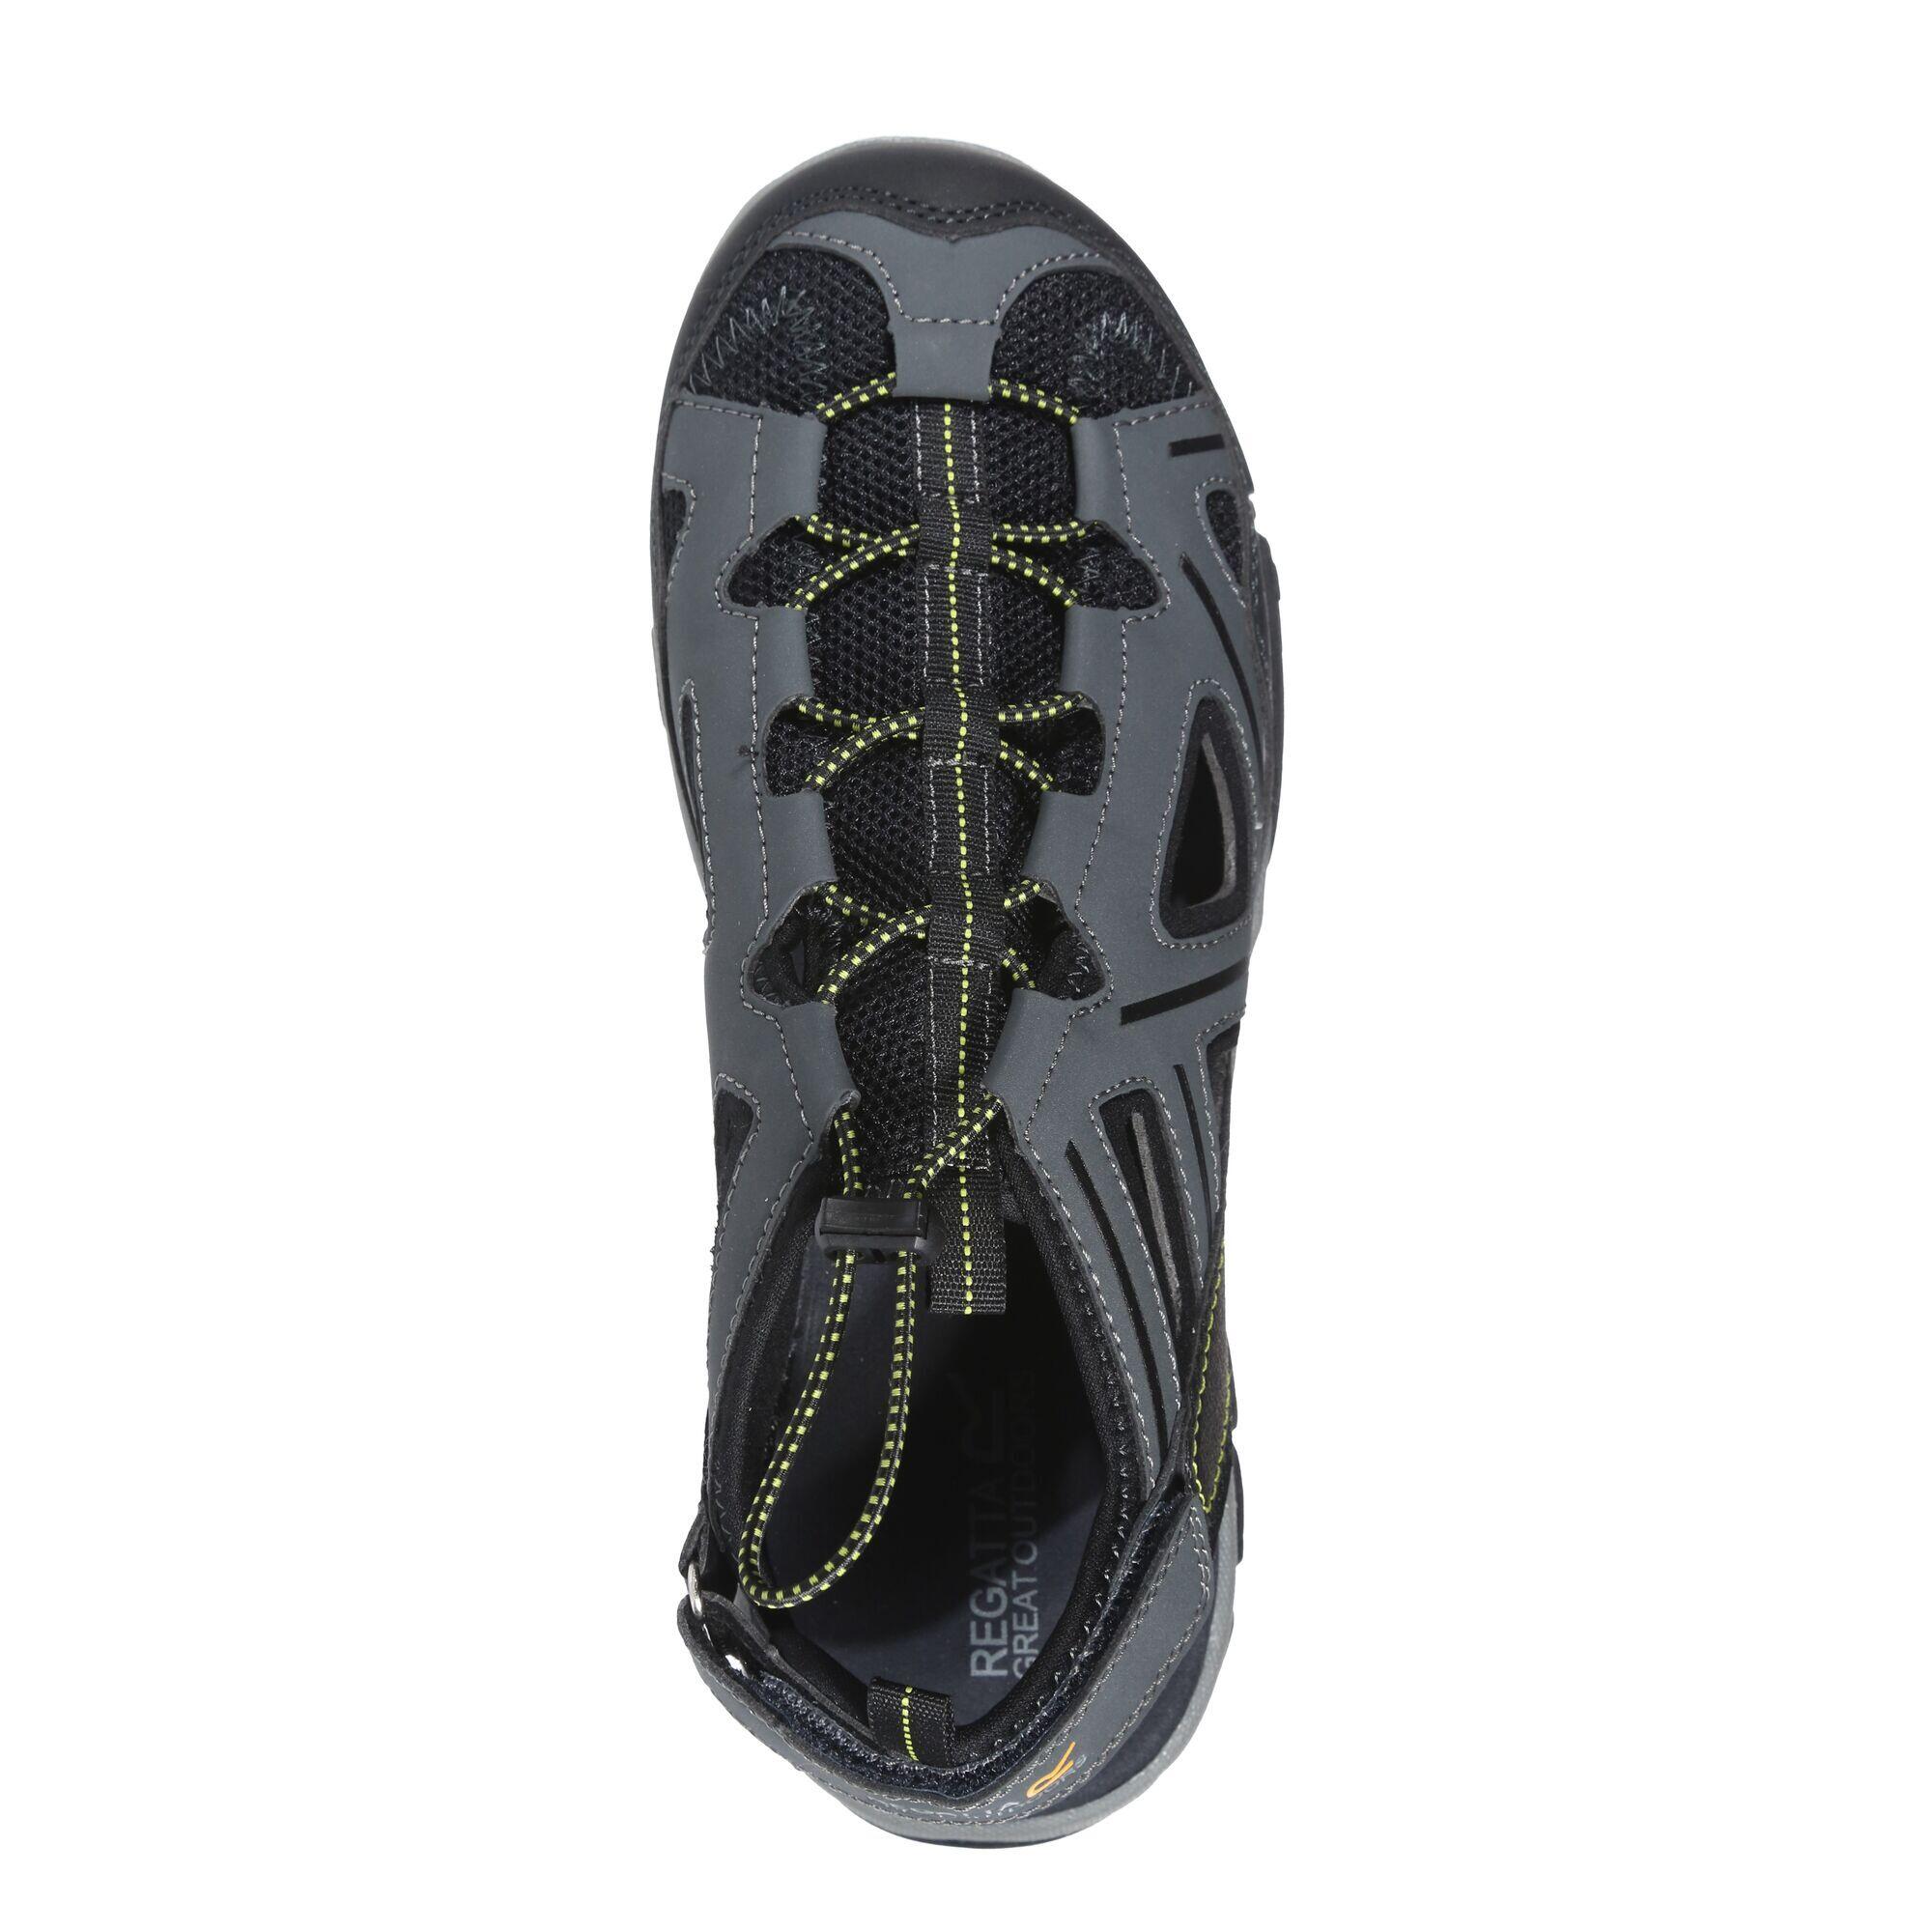 Westshore 3 Men's Hiking Sandals - Briar Grey 6/6